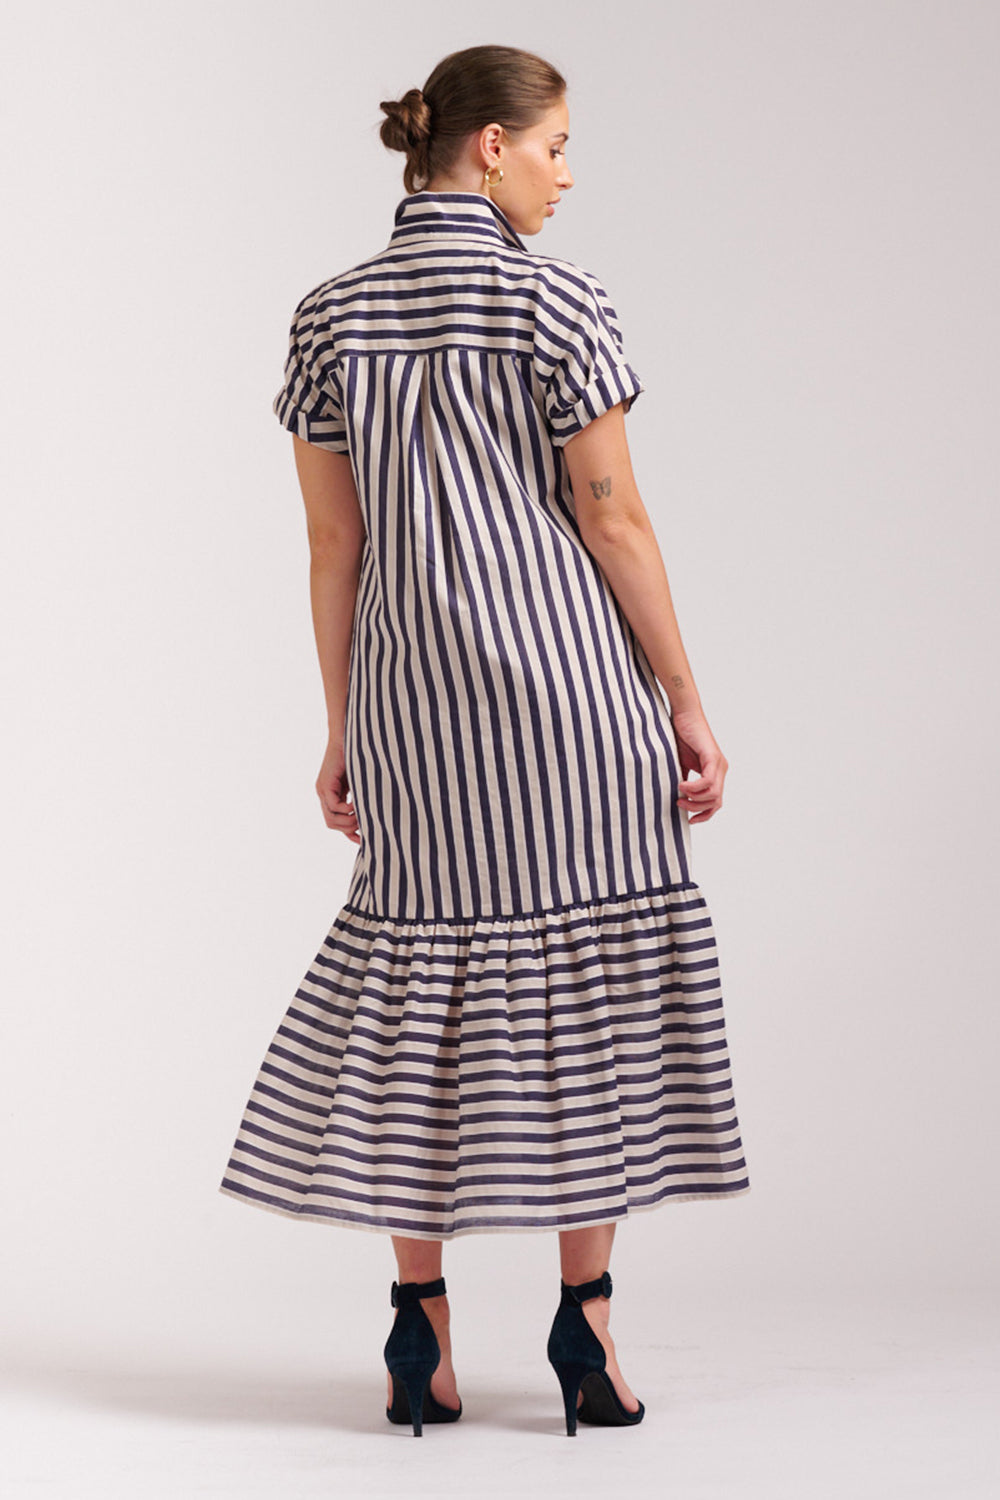 Shirty The Emma Dress Navy/Stone Stripe